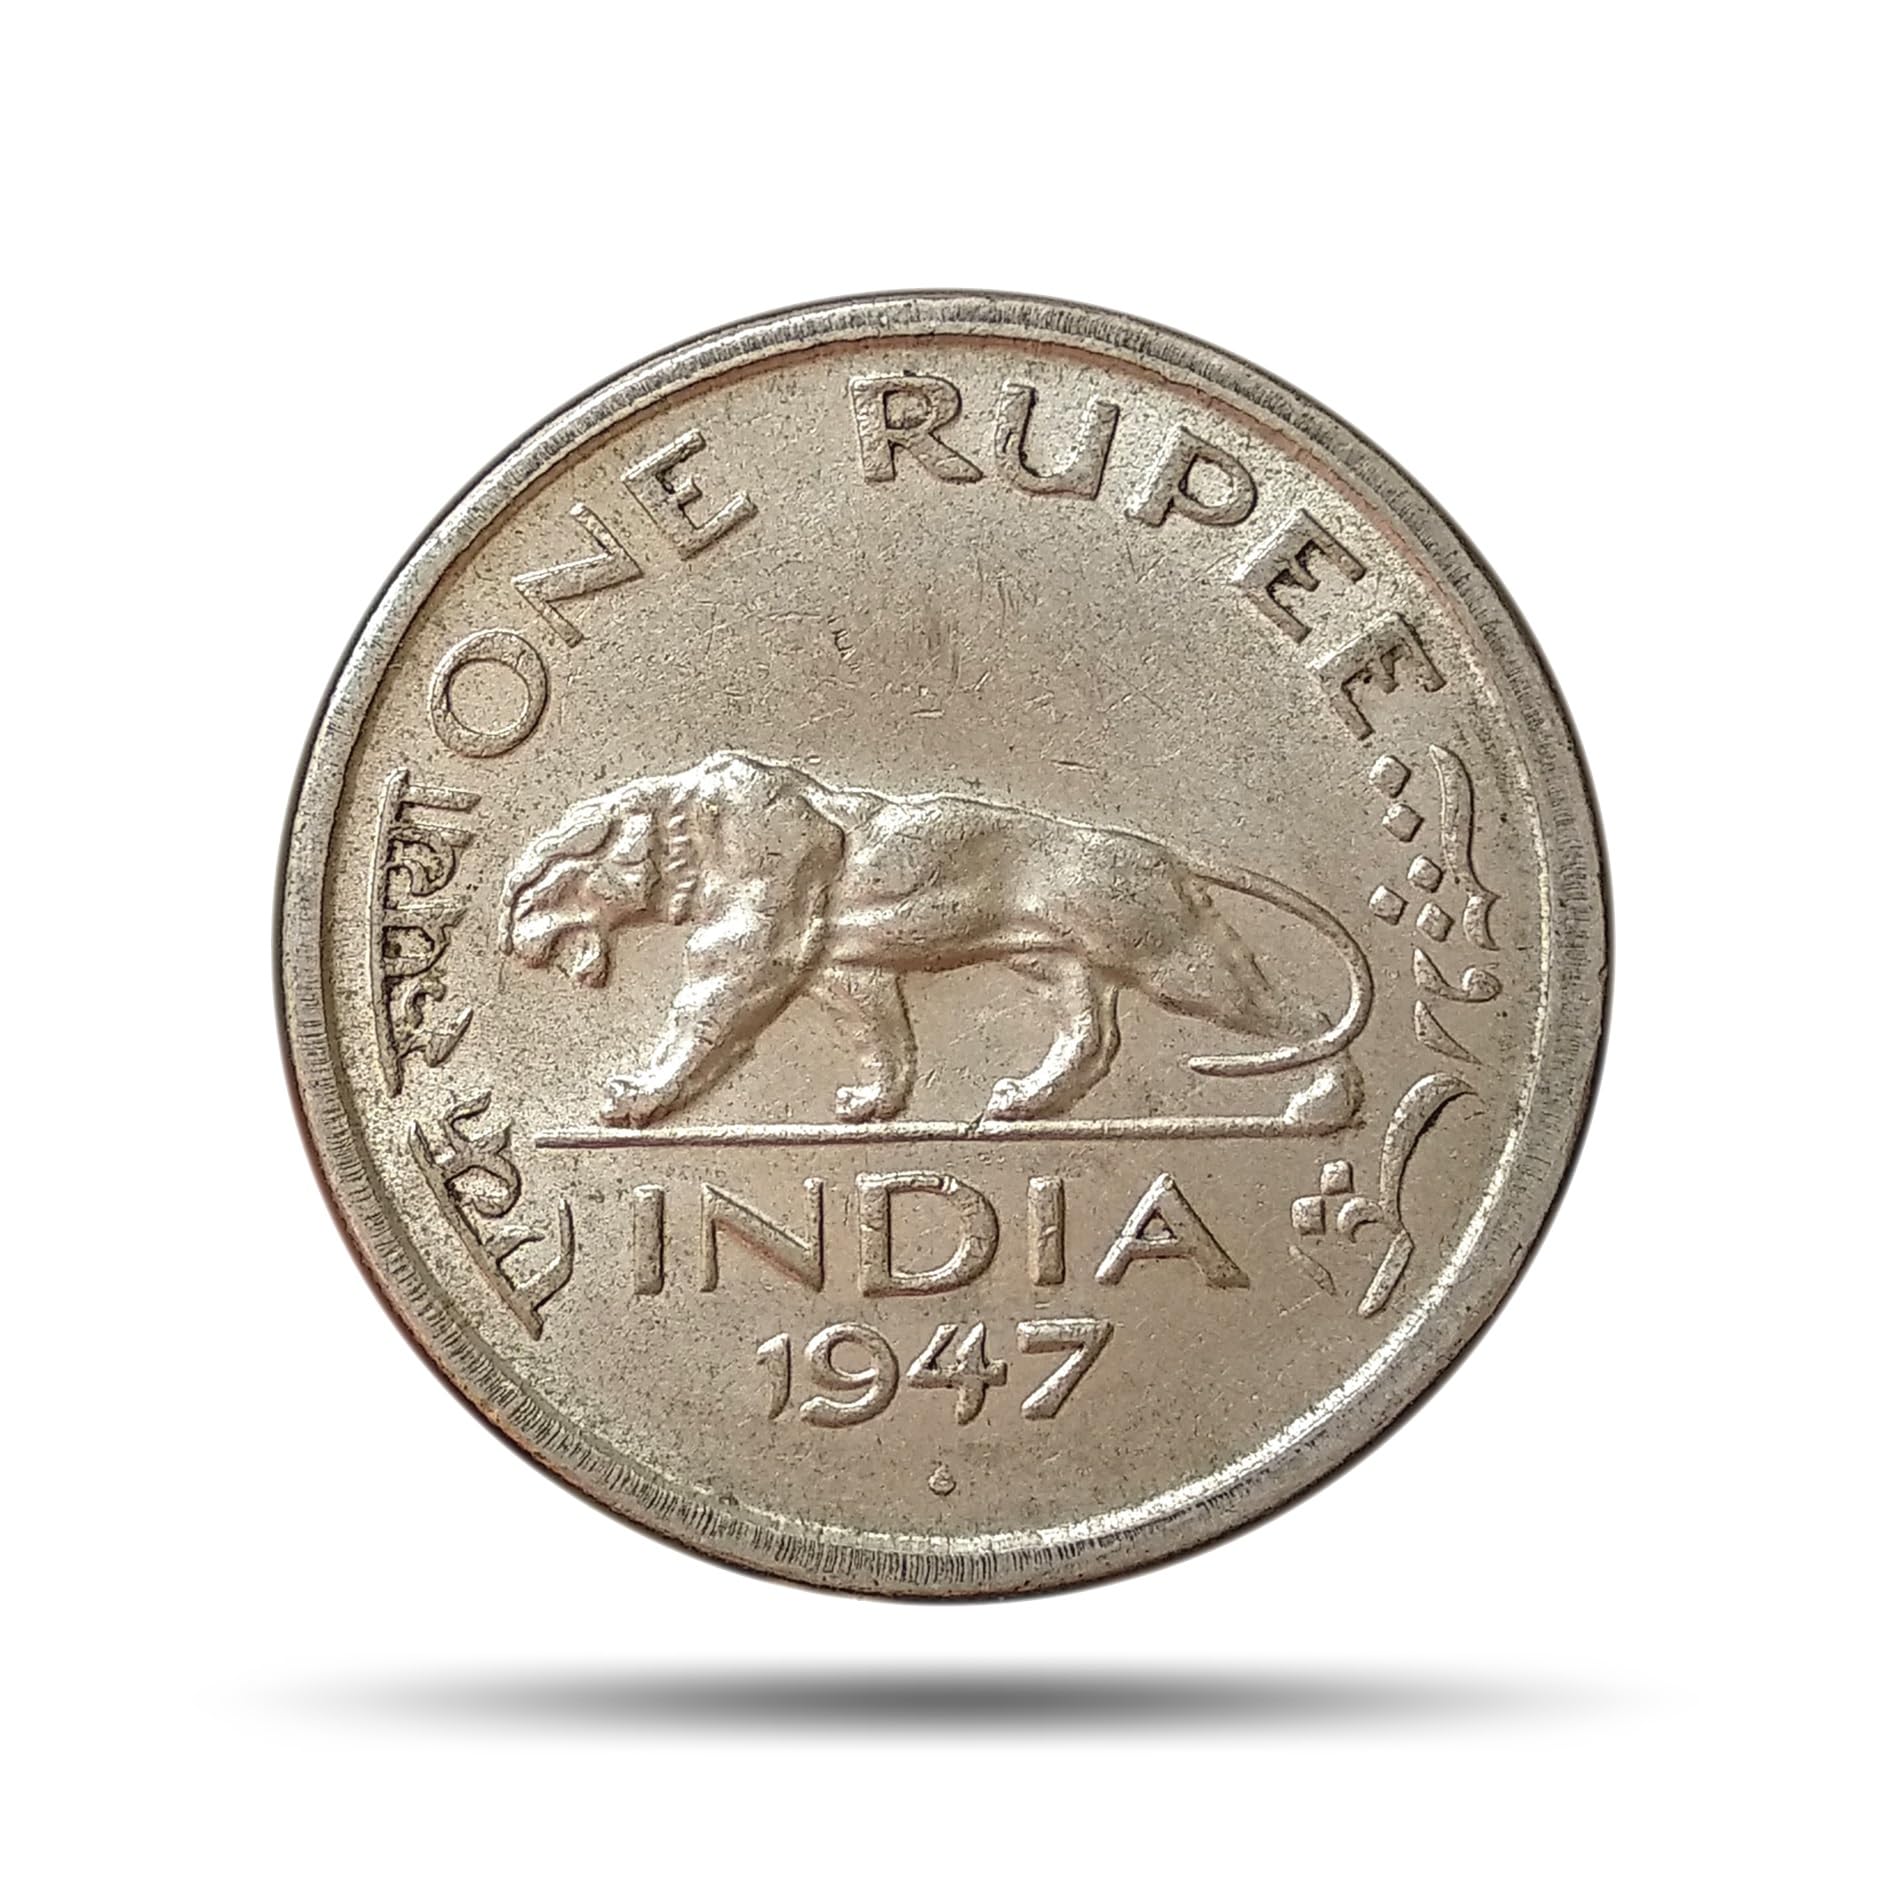 Buy British India King George VI One Rupee Coin Mumbai Online | Mintage World